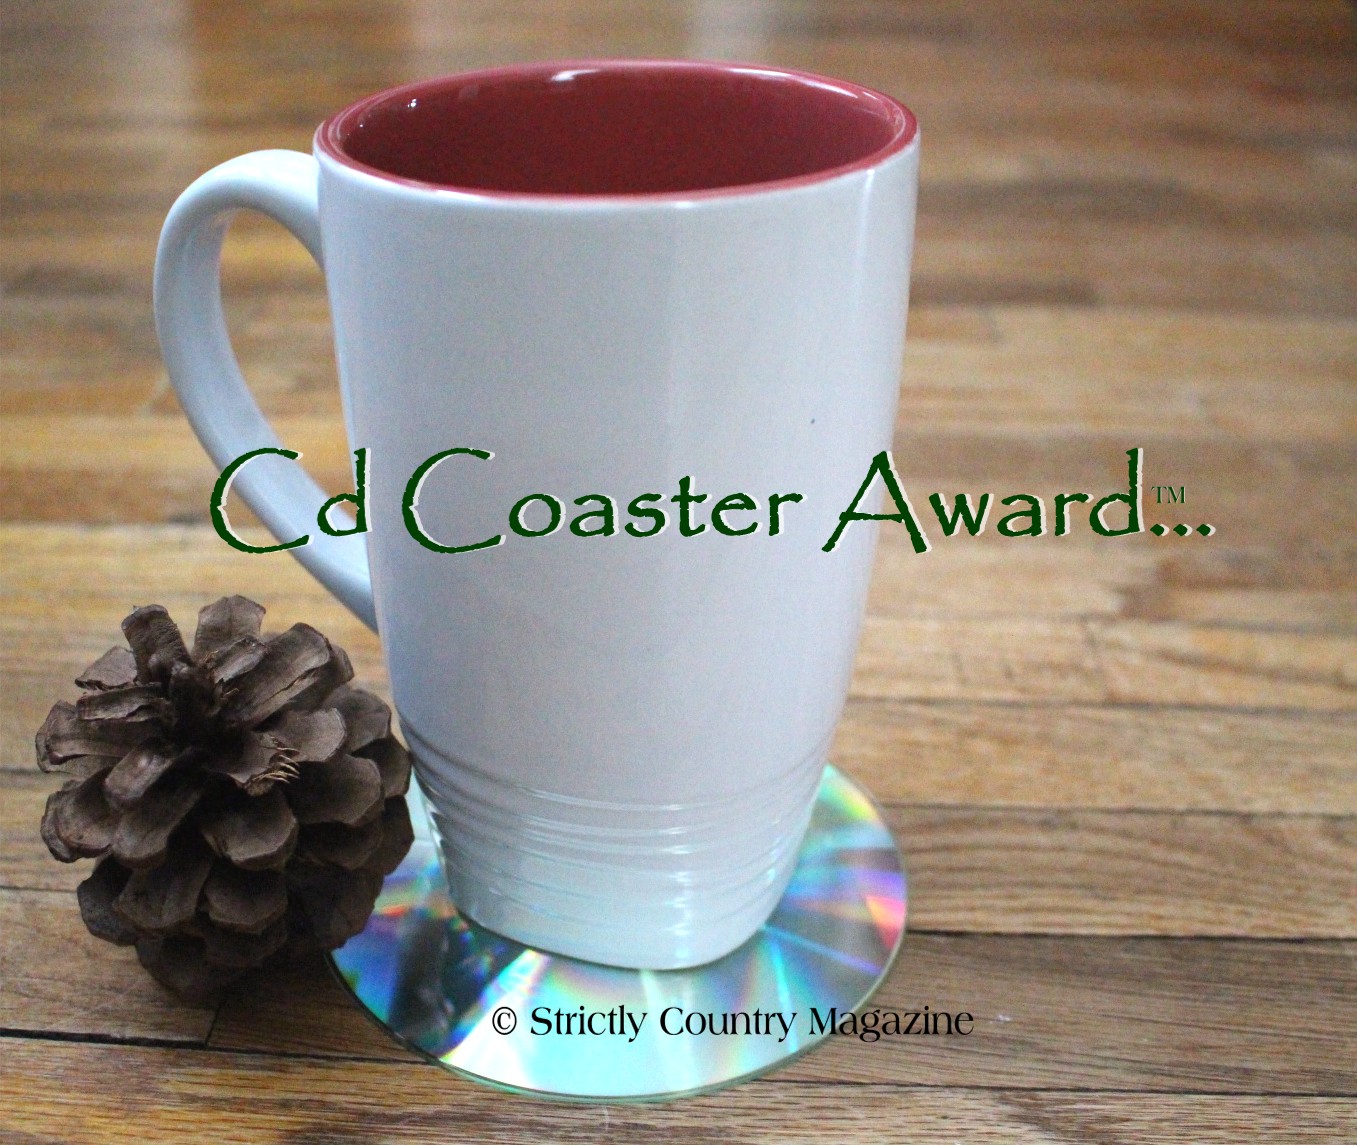 Strictly Country Magazine copyright Spirit Awards CD Coaster Award title